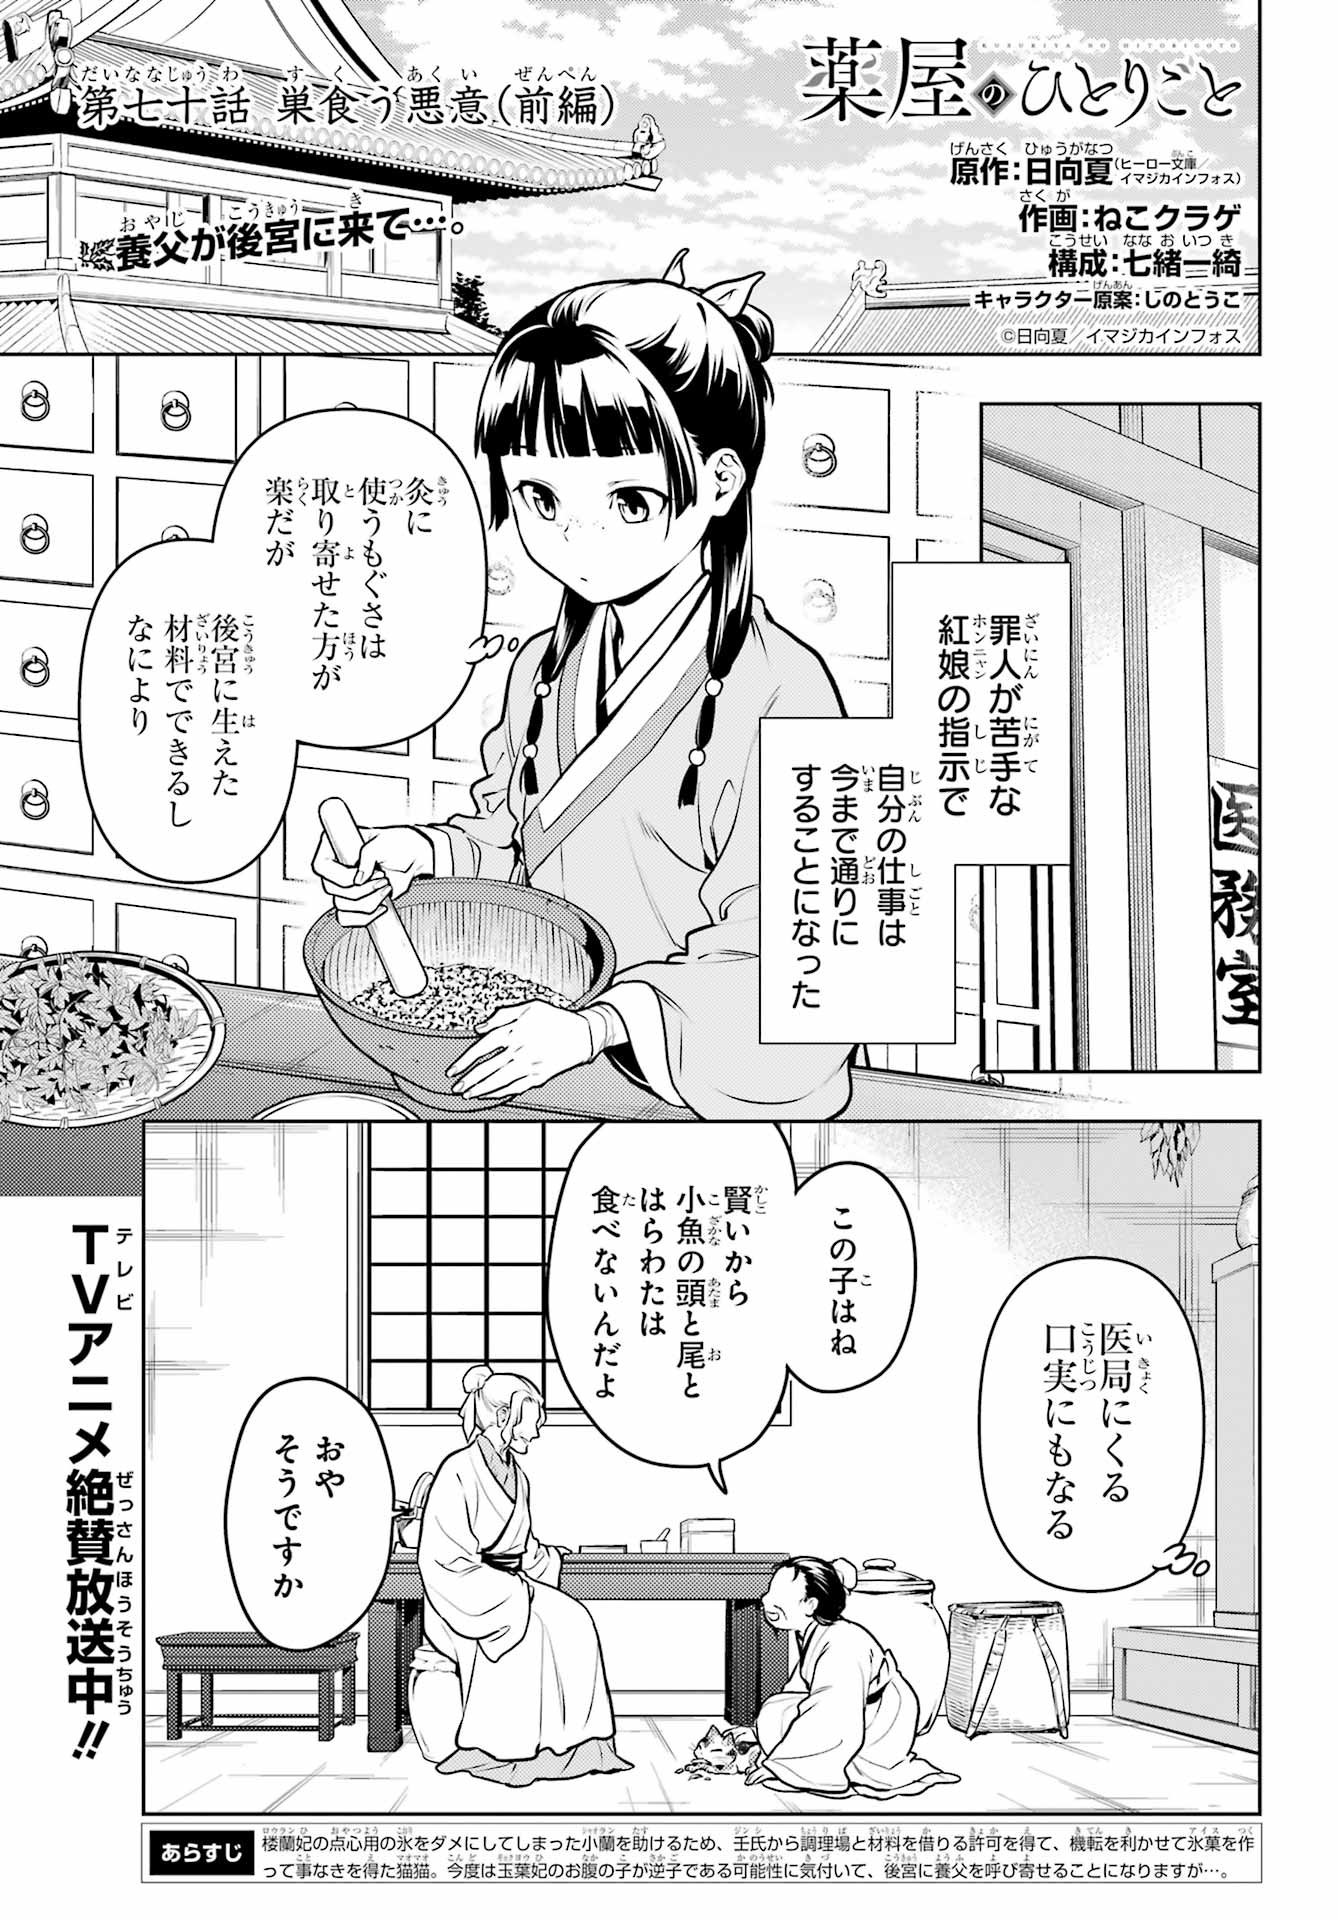 Kusuriya no Hitorigoto - Chapter 70 - Page 1